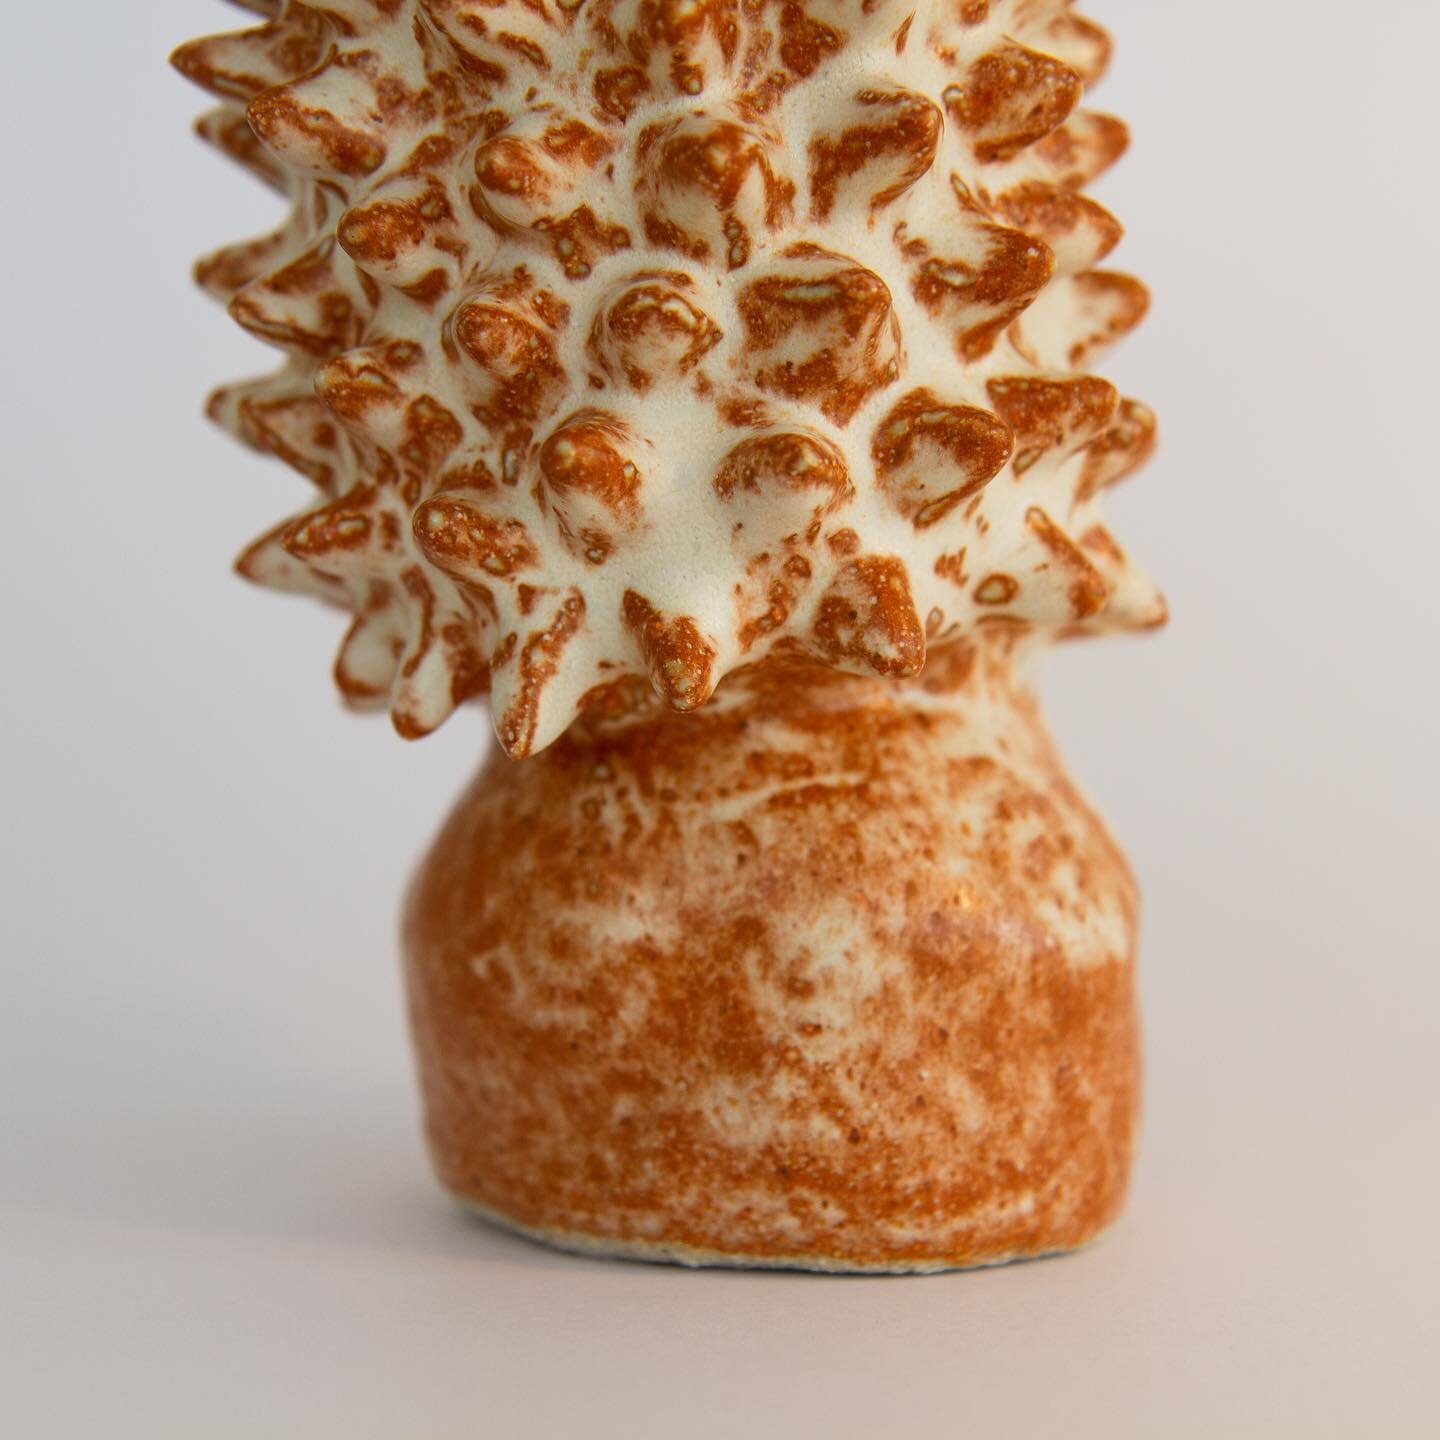 Details of Spiky ochre vase, 2022
Hand formed in white raku clay with gaze
.
.
.
#clay&nbsp;#cremerging&nbsp;#australianartist&nbsp;#stoneware&nbsp;#1000vases&nbsp;#emergingartist&nbsp;#emergingaustralianartist&nbsp;#keramik&nbsp;#handbuiltceramics&n